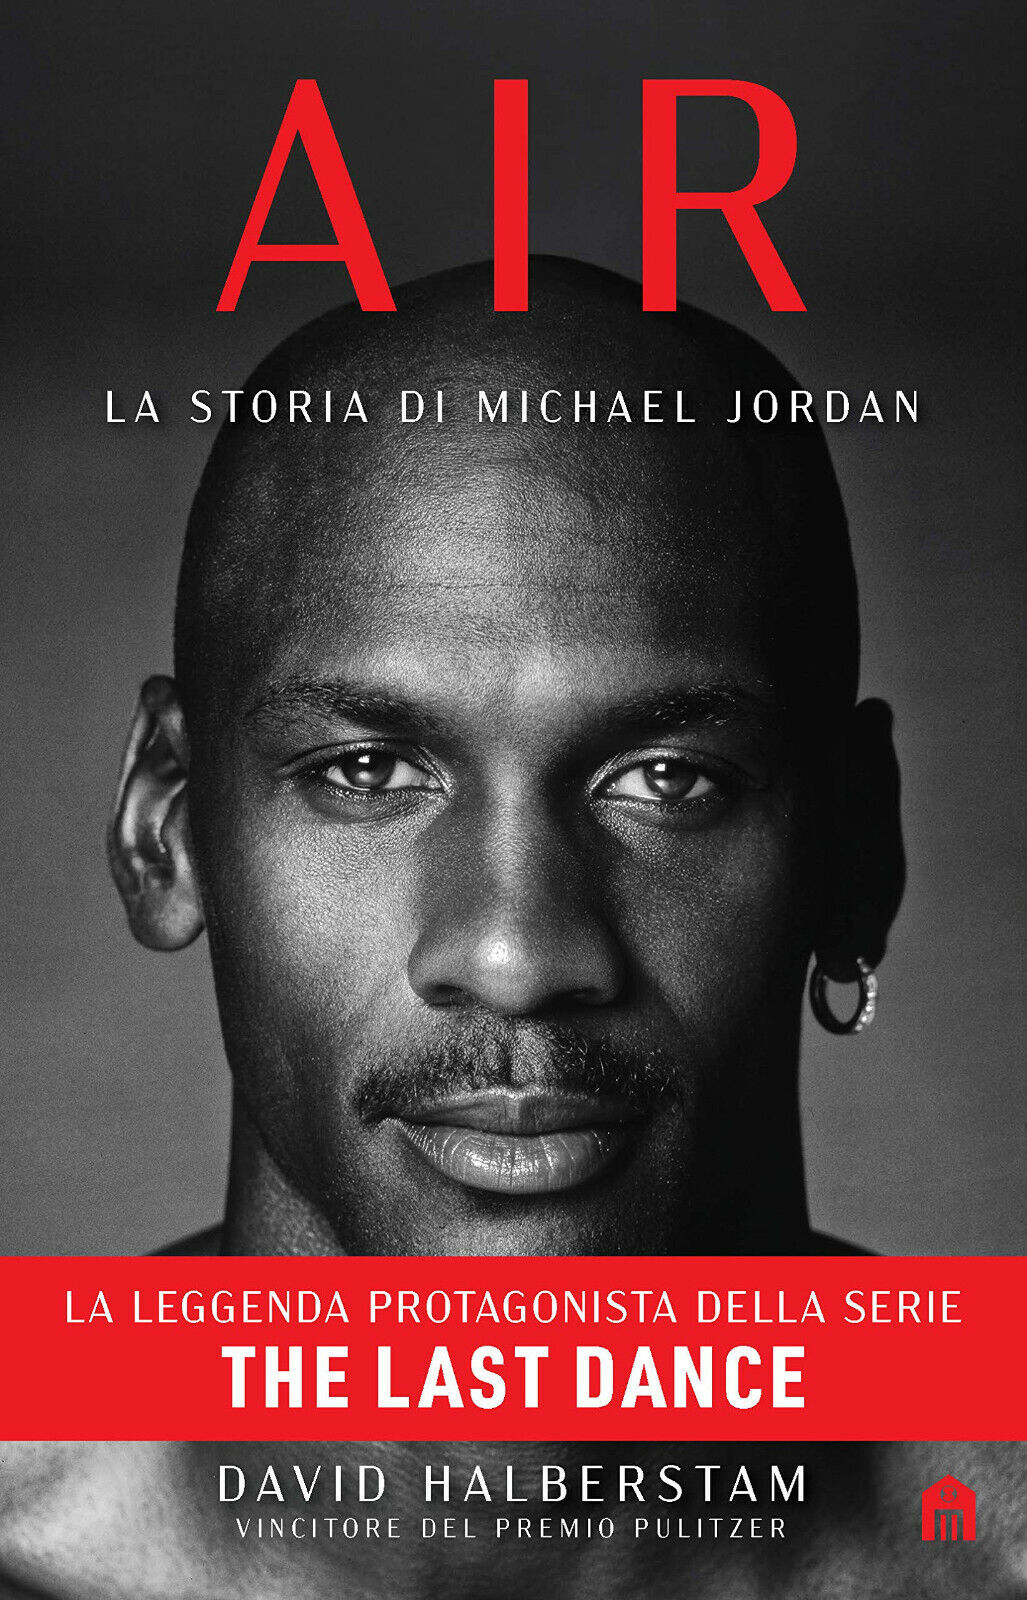 Air. La storia di Michael Jordan - David Halberstam - Magazzini Salani, 2020 libro usato